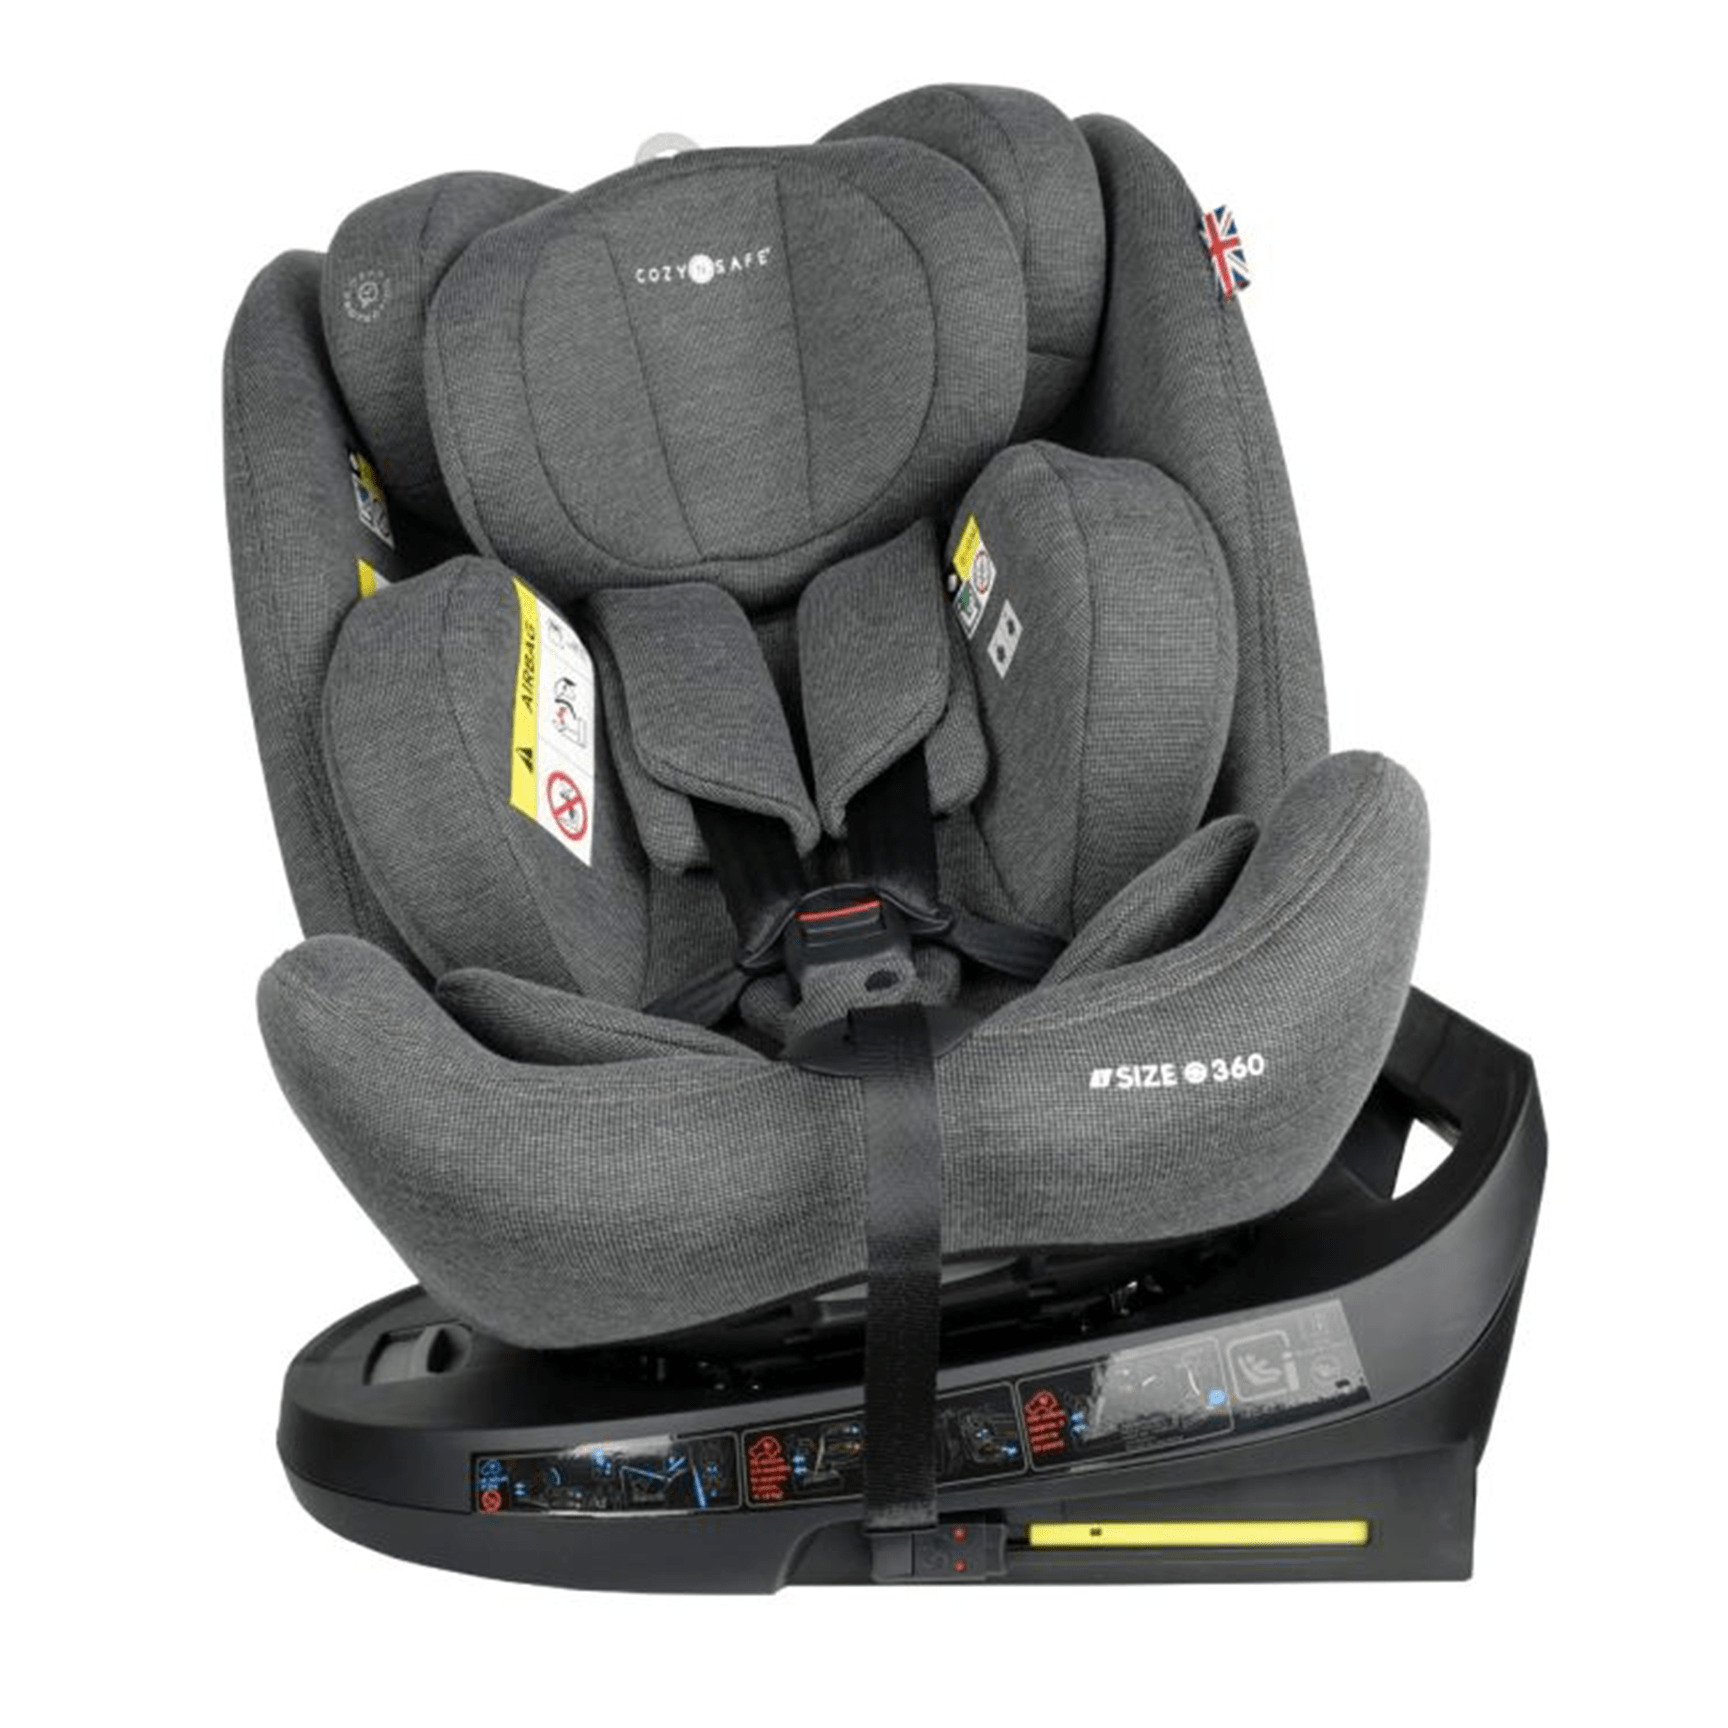 Cozy N Safe baby car seats Cozy N Safe Apollo 360 Group 0+/1/2/3 Car Seat - Moon Grey EST-06